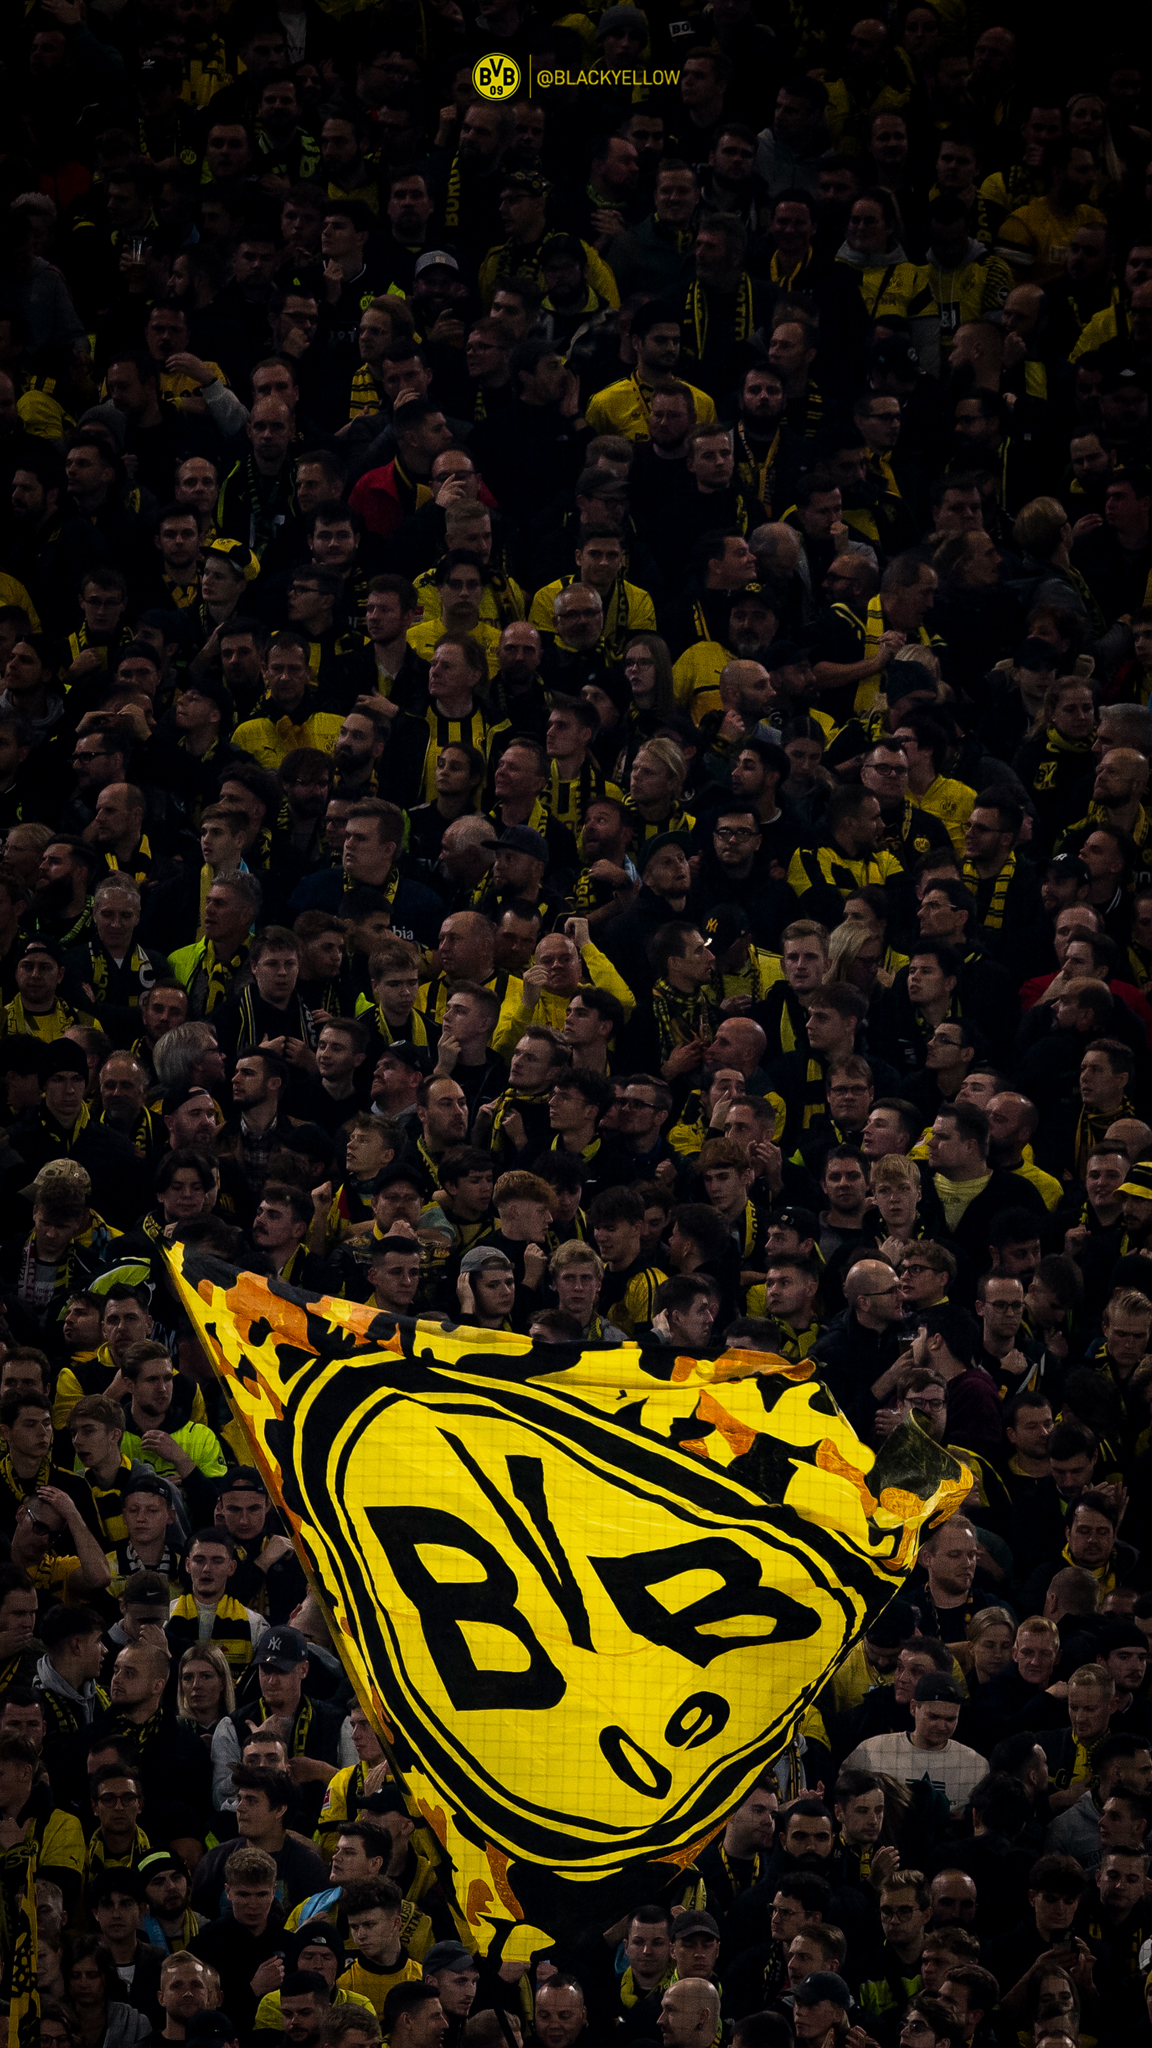 Borussia Dortmund Need A Wallpaper Change Wallpaperwednesday T Co Yds6k087z9 Twitter